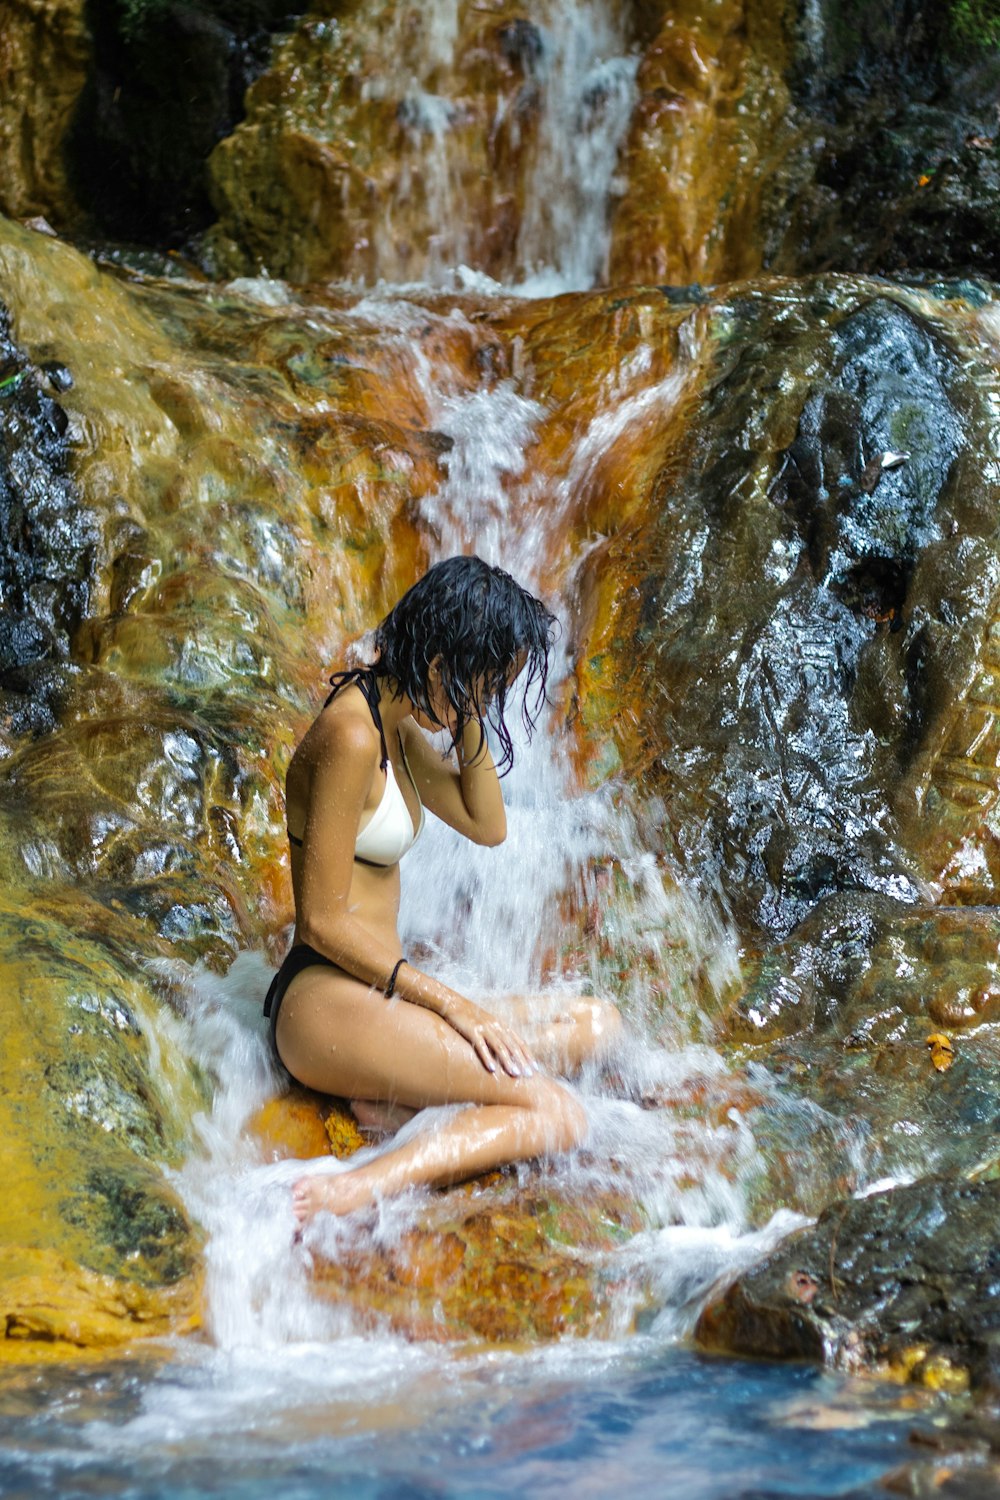 a woman in a bikini sitting on a rock next to a waterfall